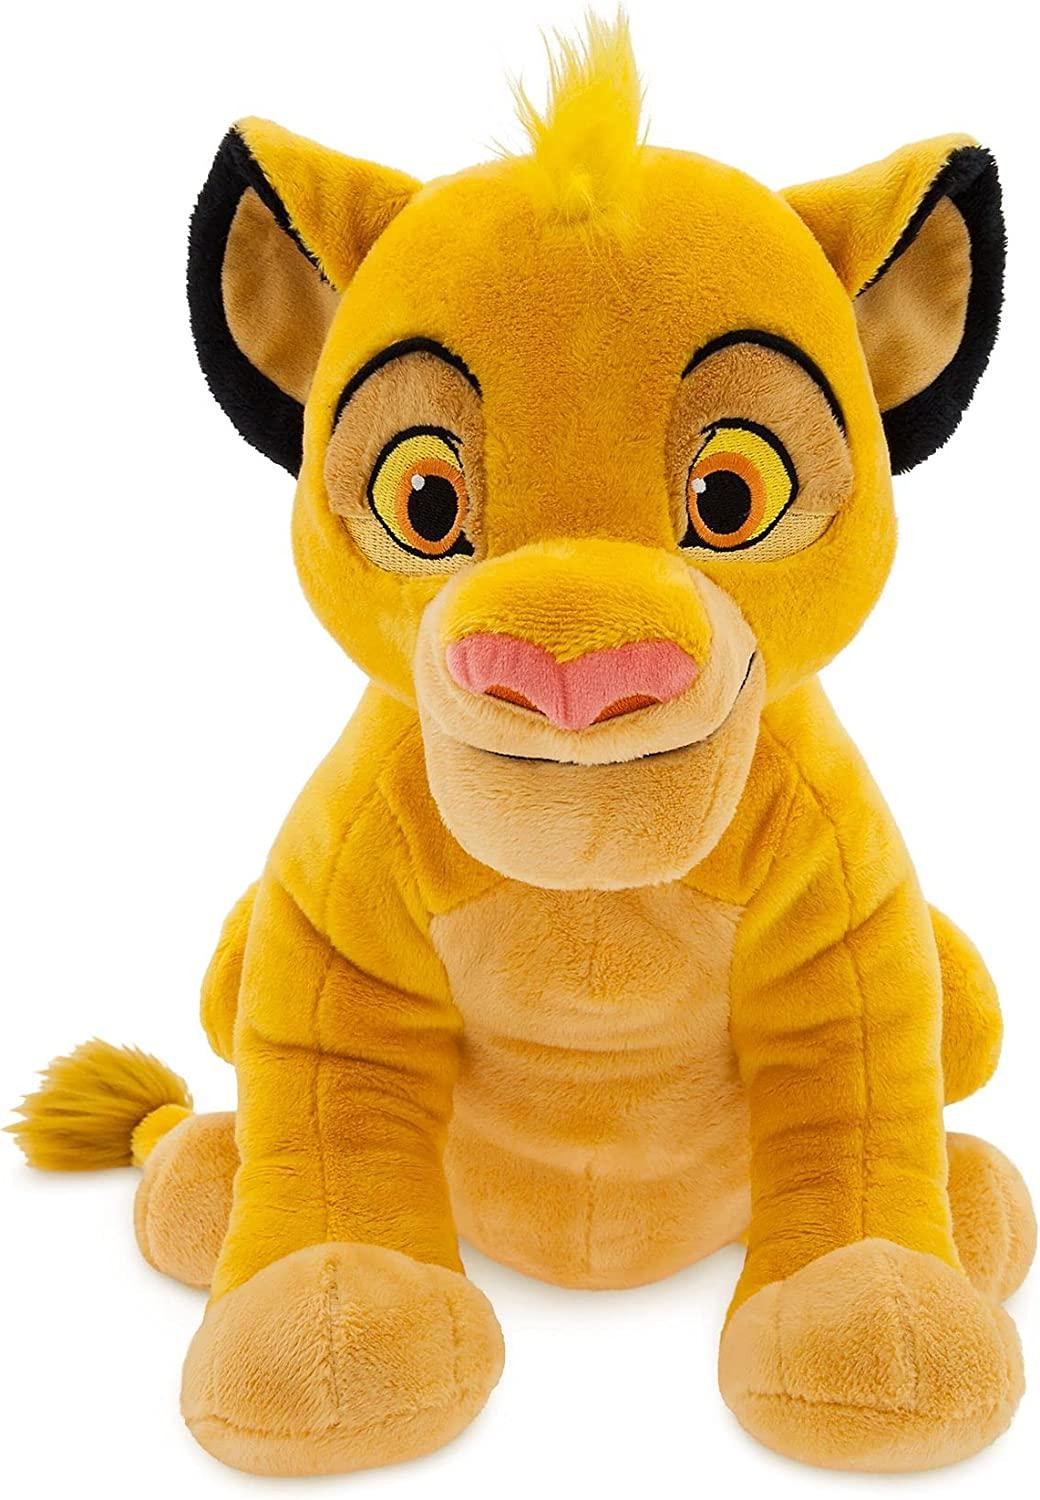 Disney Store The Lion King Simba Medium 33cm Soft Plush Toy